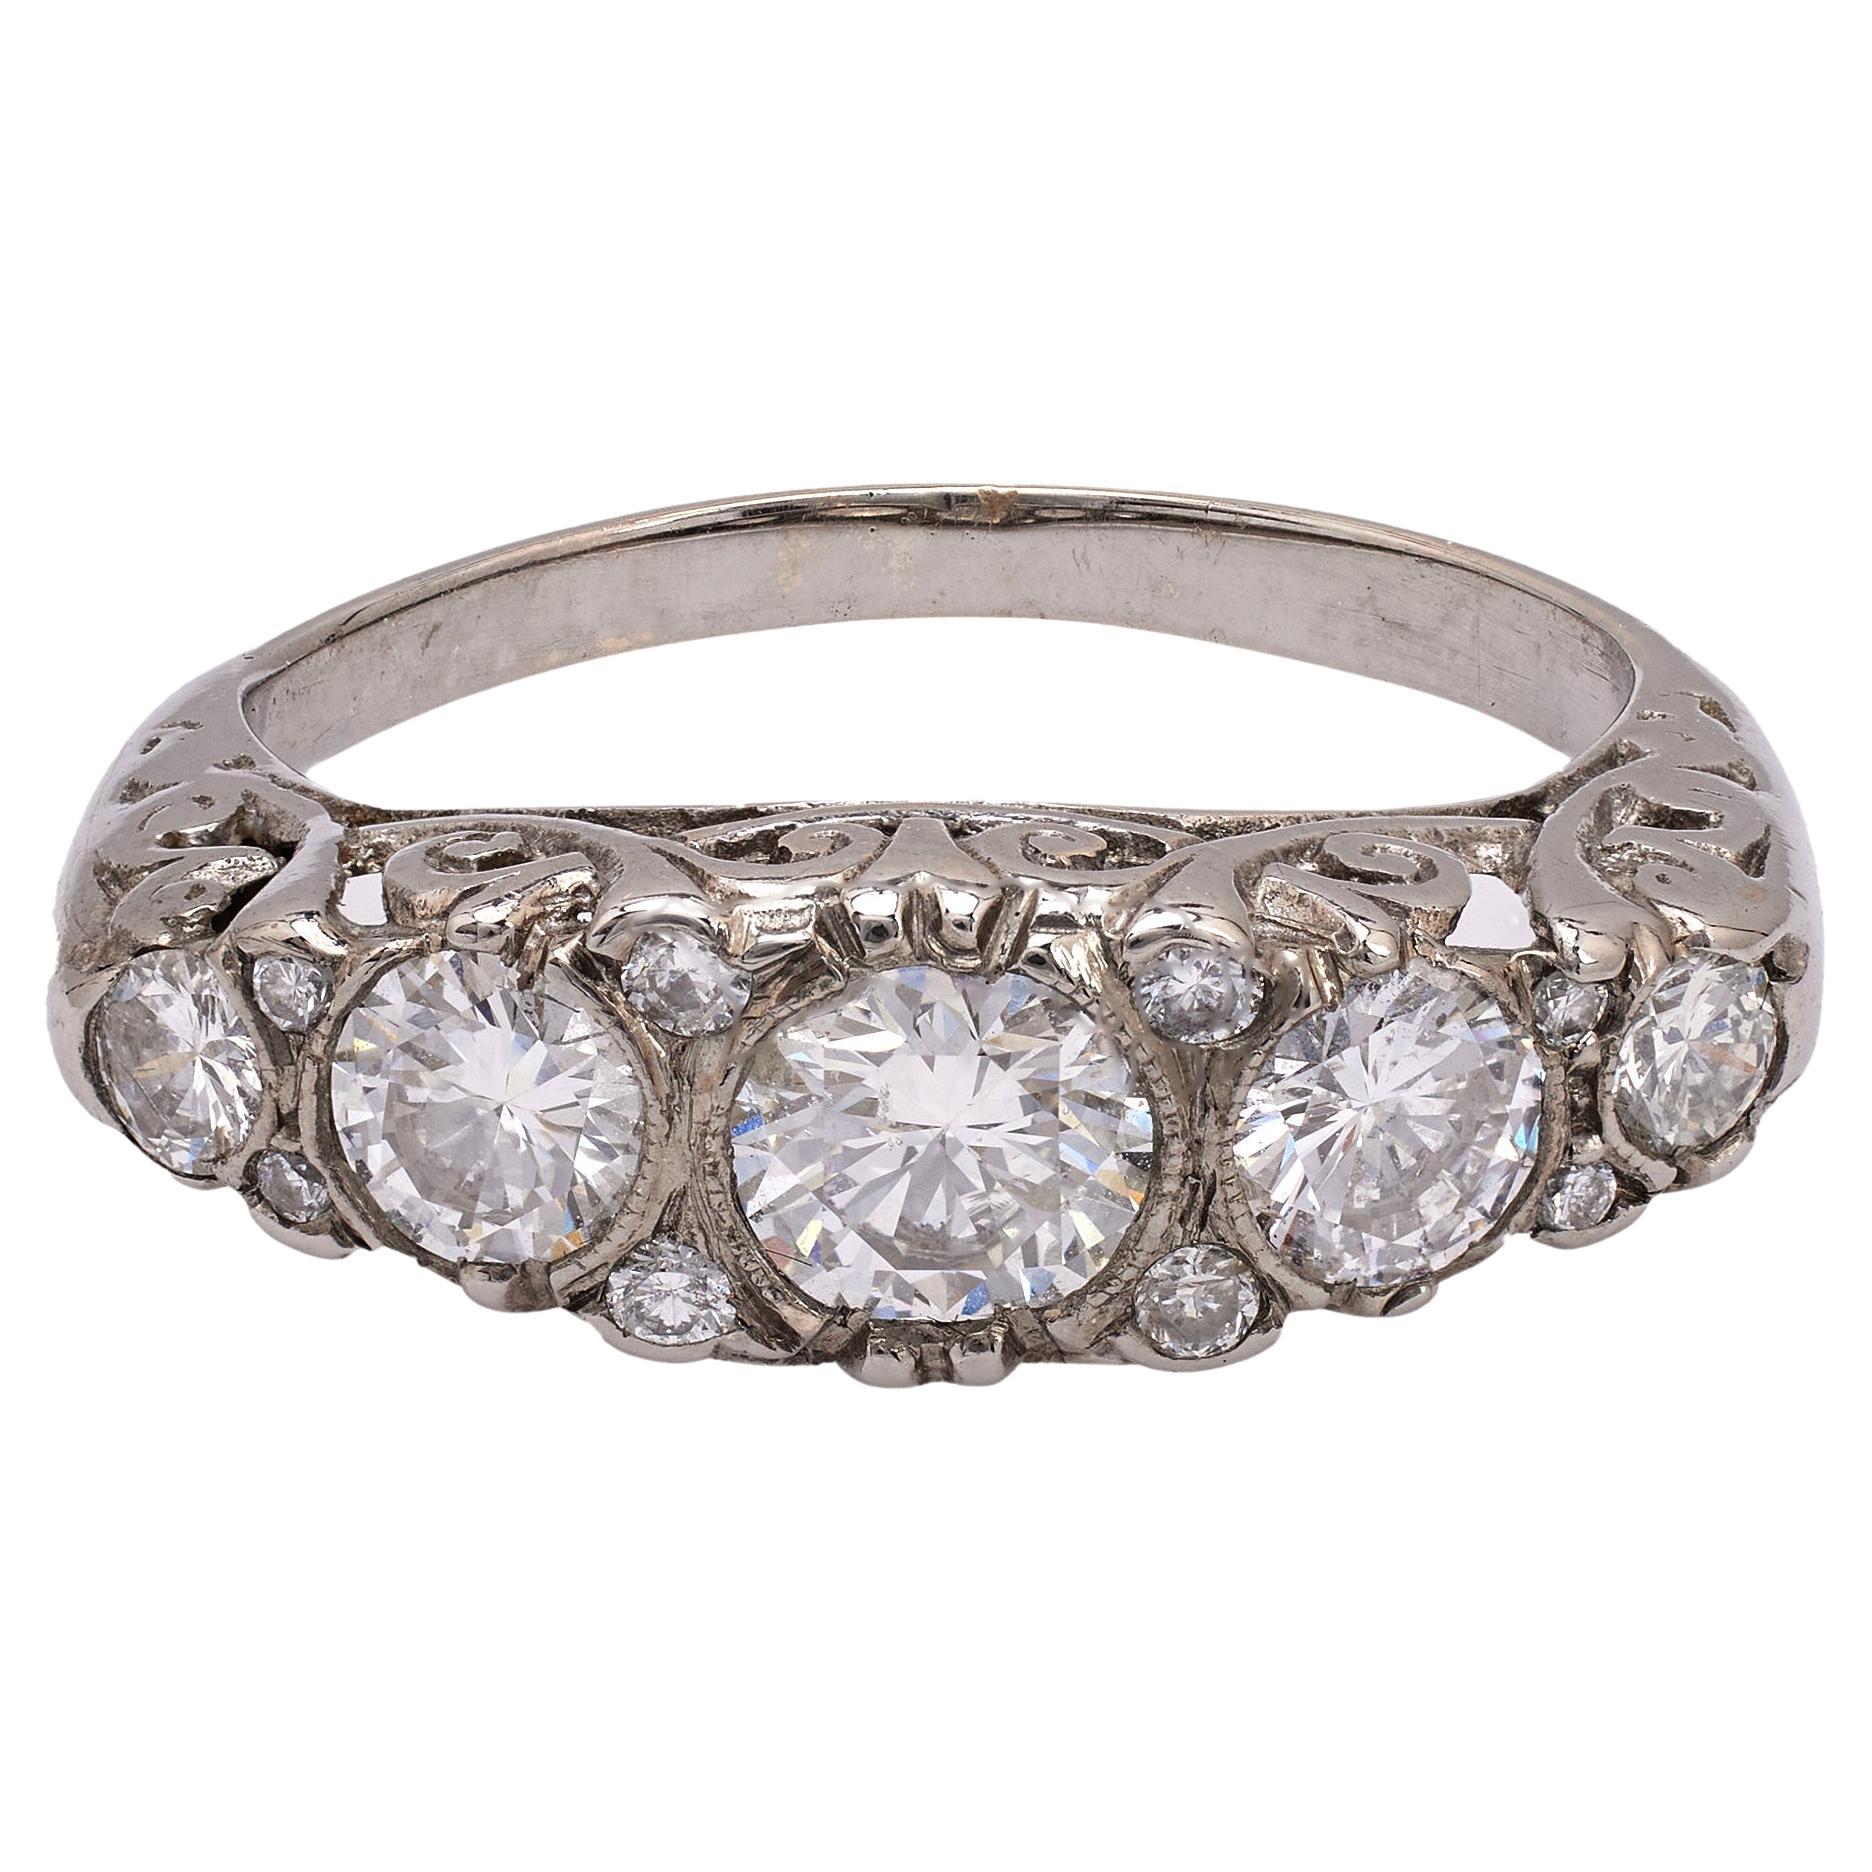 Art Deco Inspired Diamond 18k White Gold Five Stone Ring